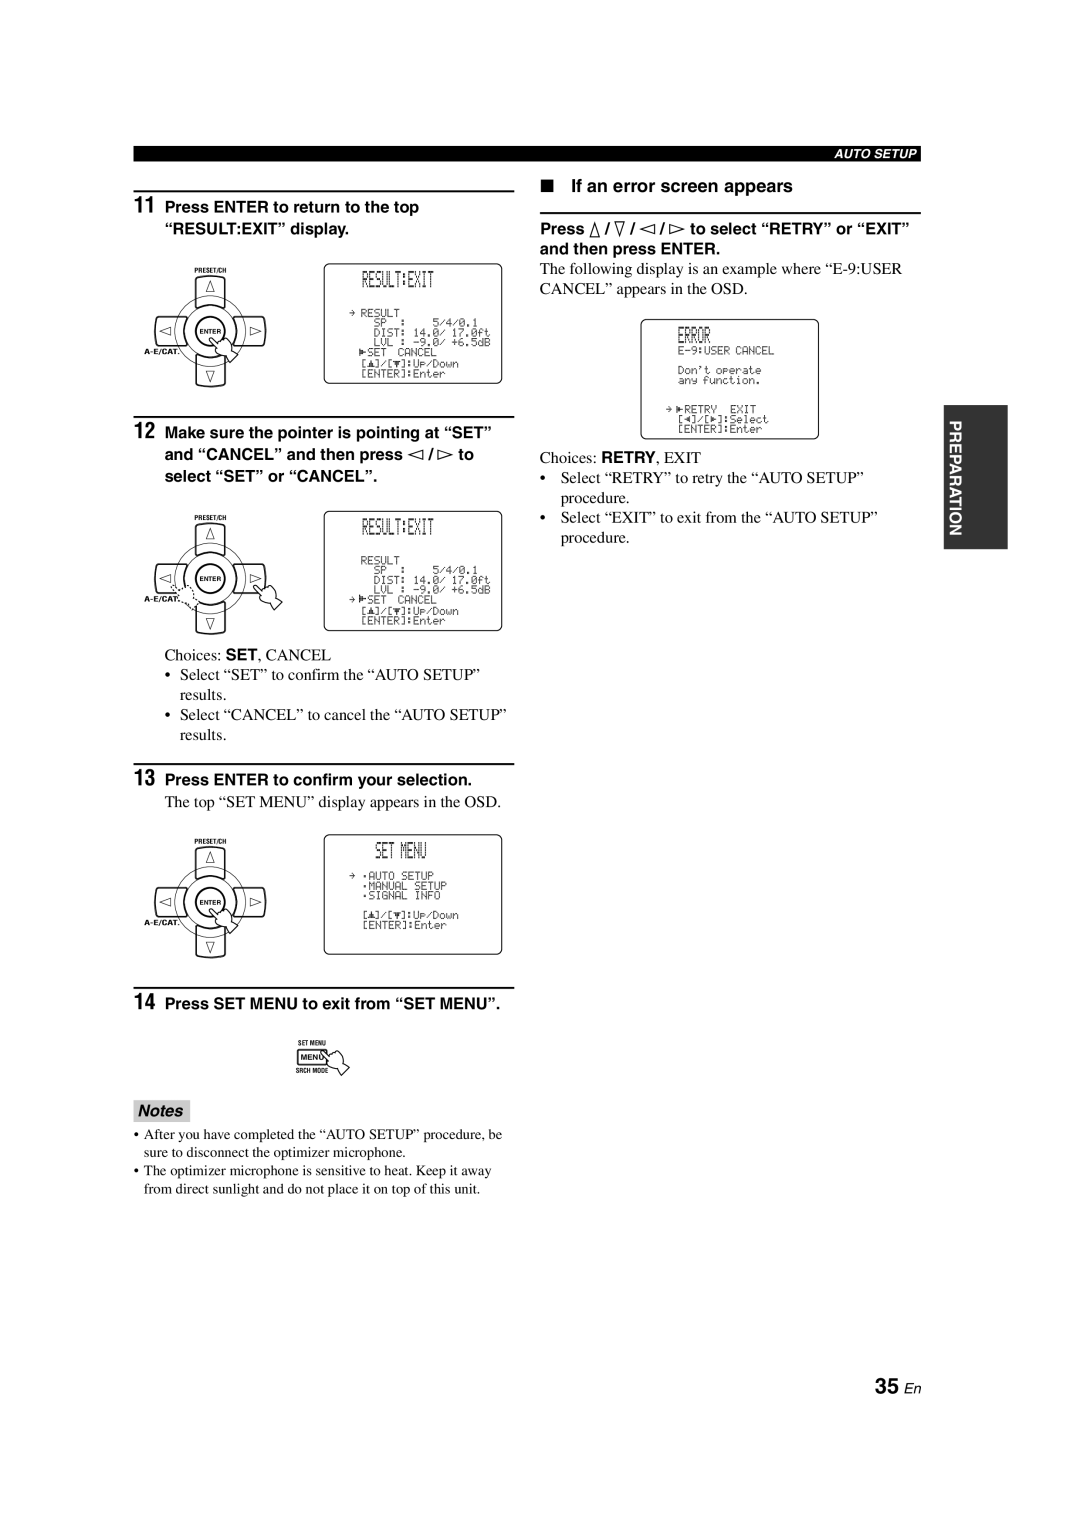 Yamaha HTR-6090 owner manual Set Menu, Error, 35 En, Result Exit, If an error screen appears, Notes 